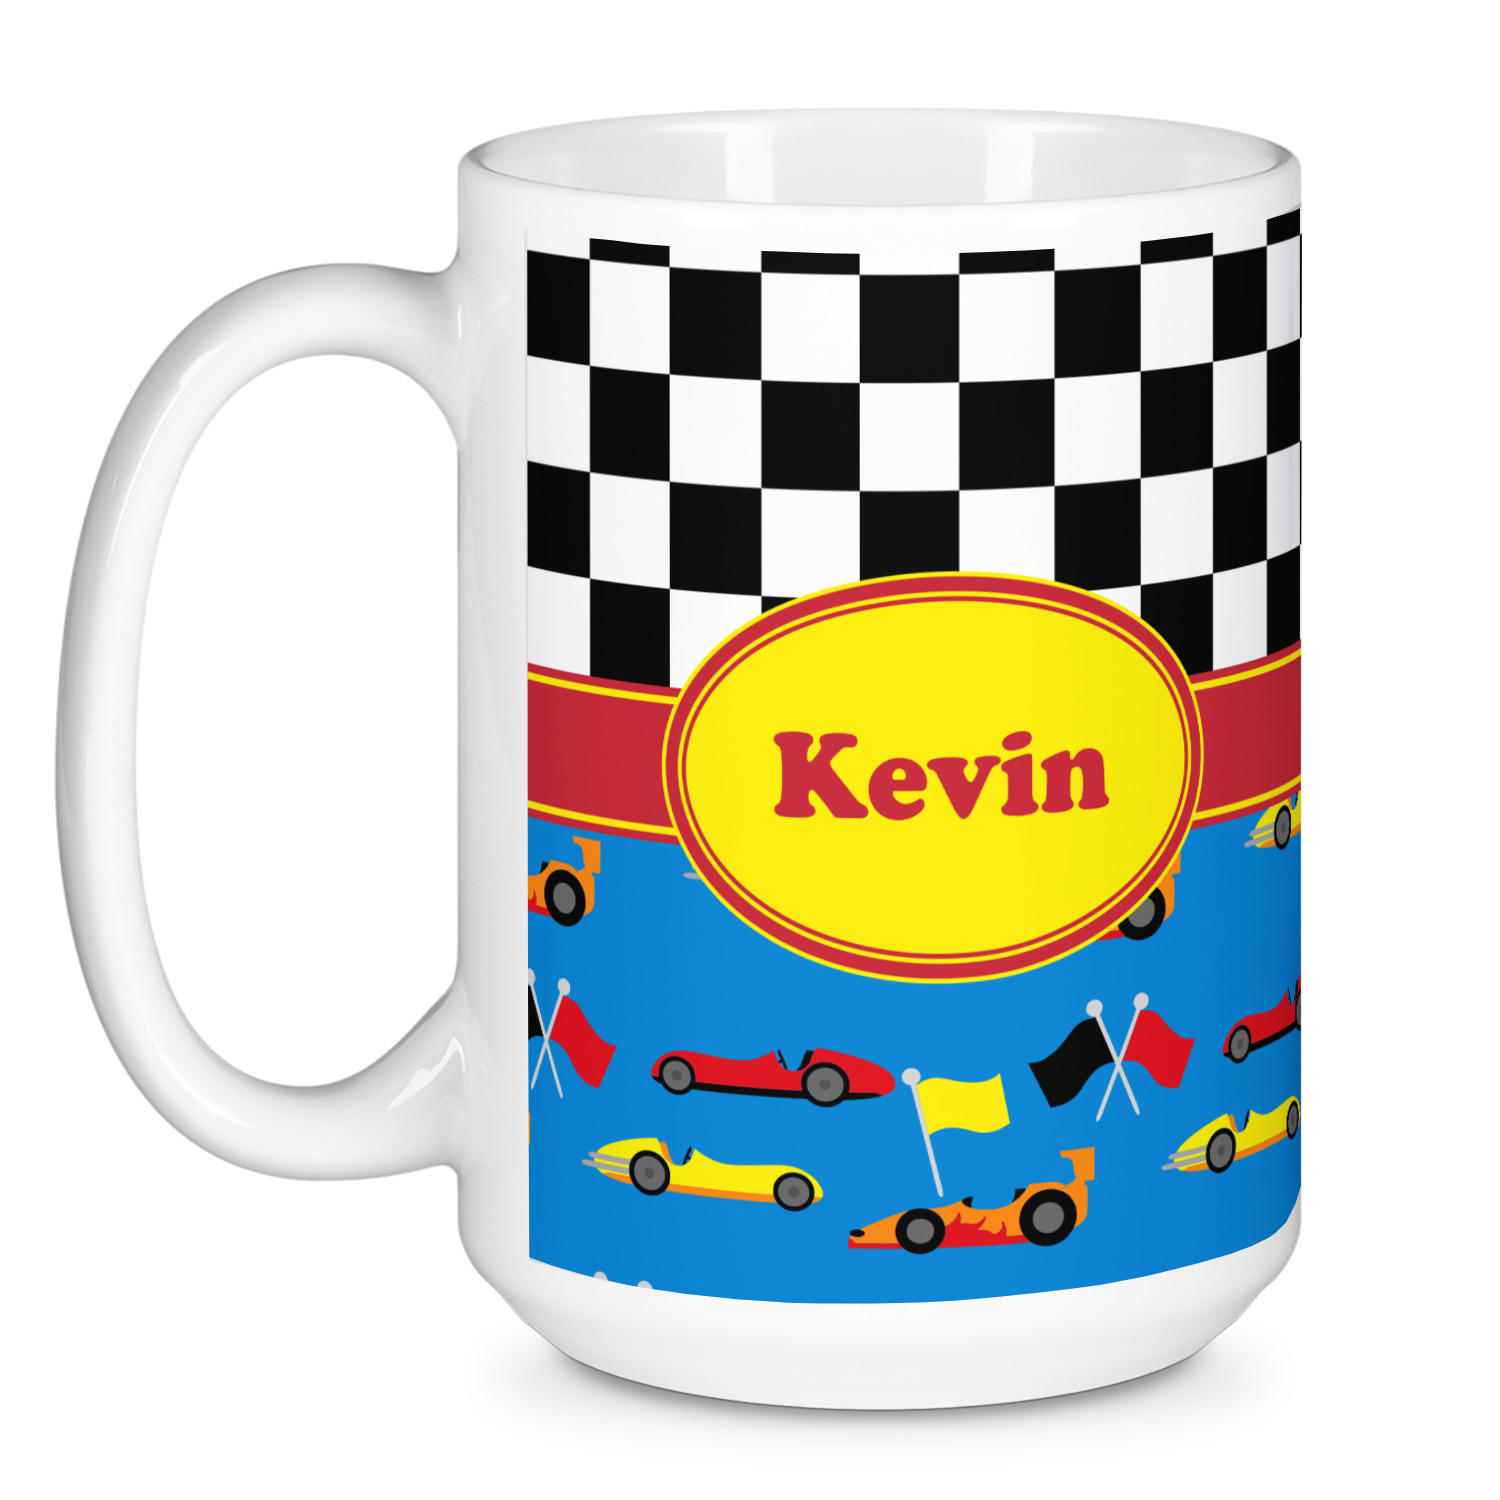 https://www.youcustomizeit.com/common/MAKE/96718/Racing-Car-Coffee-Mug-15-oz-White.jpg?lm=1604014849